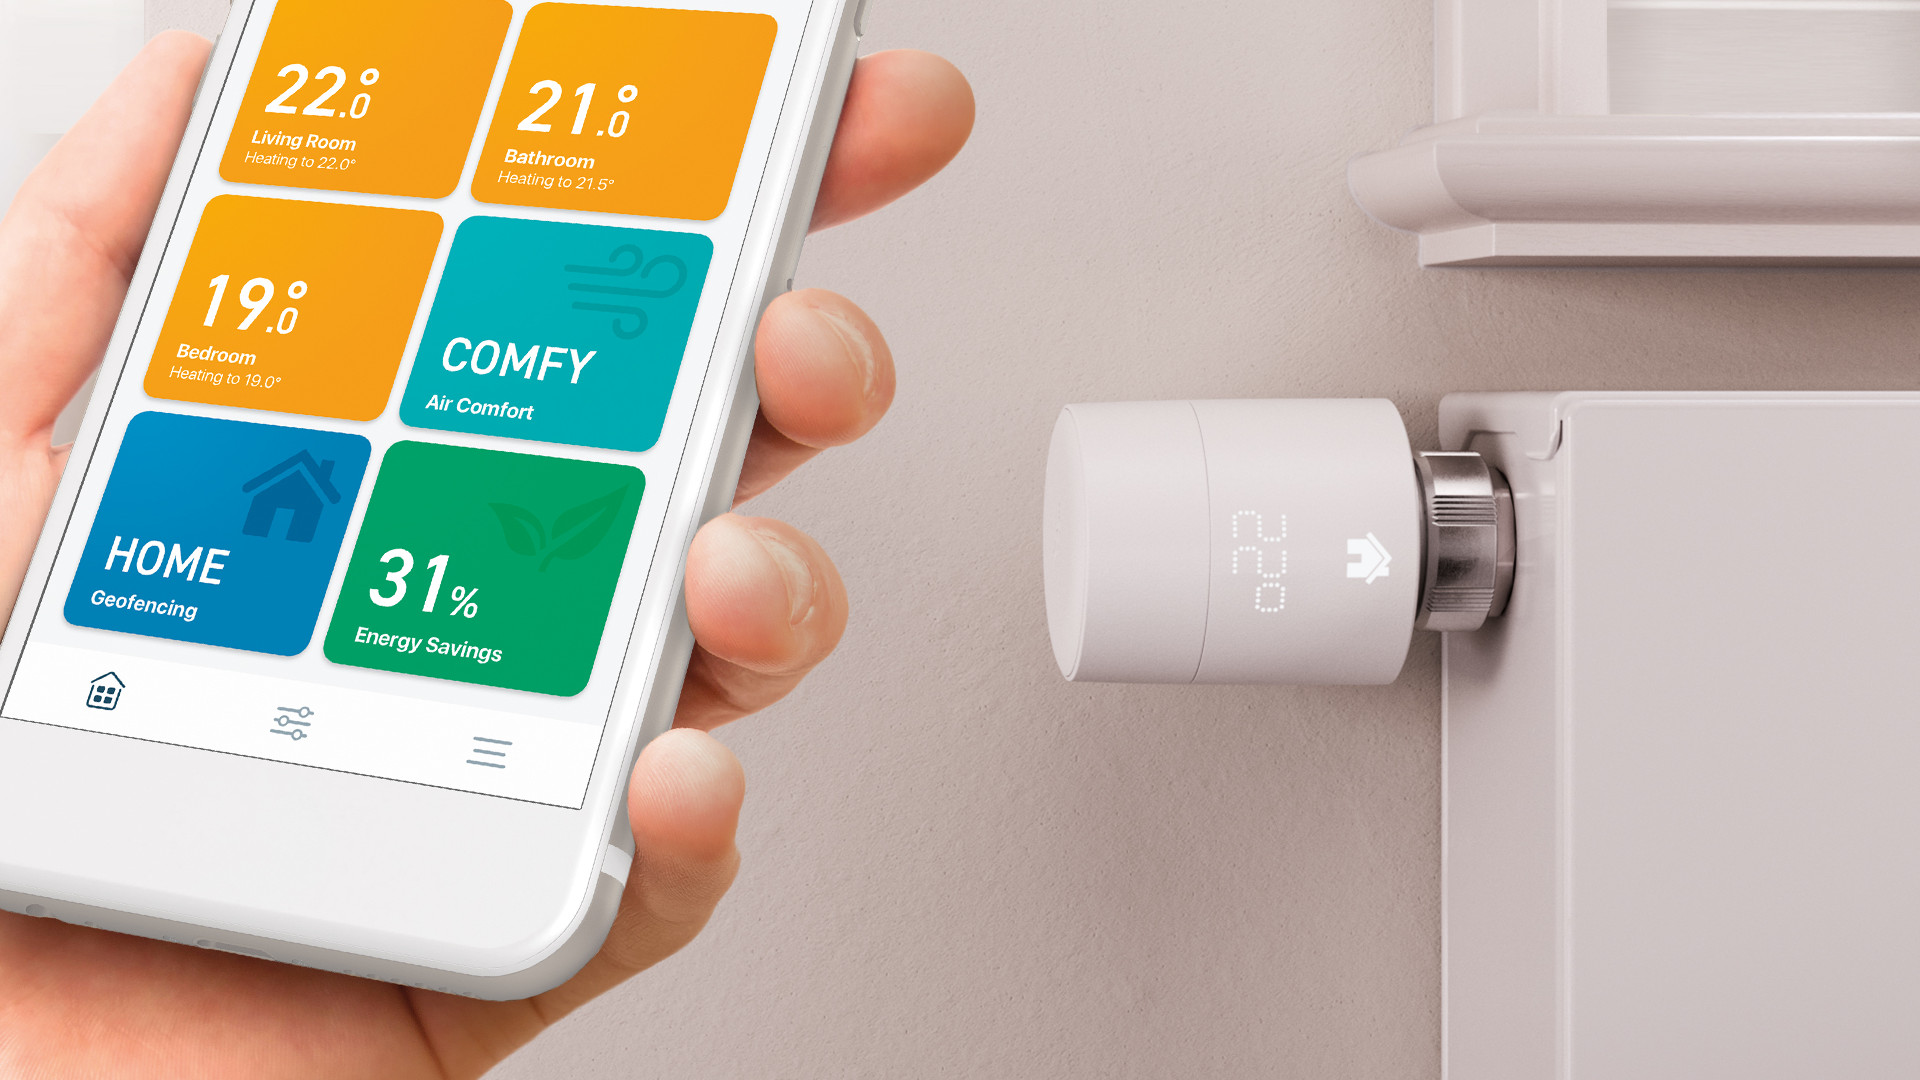 Tado Smart Thermostat Review